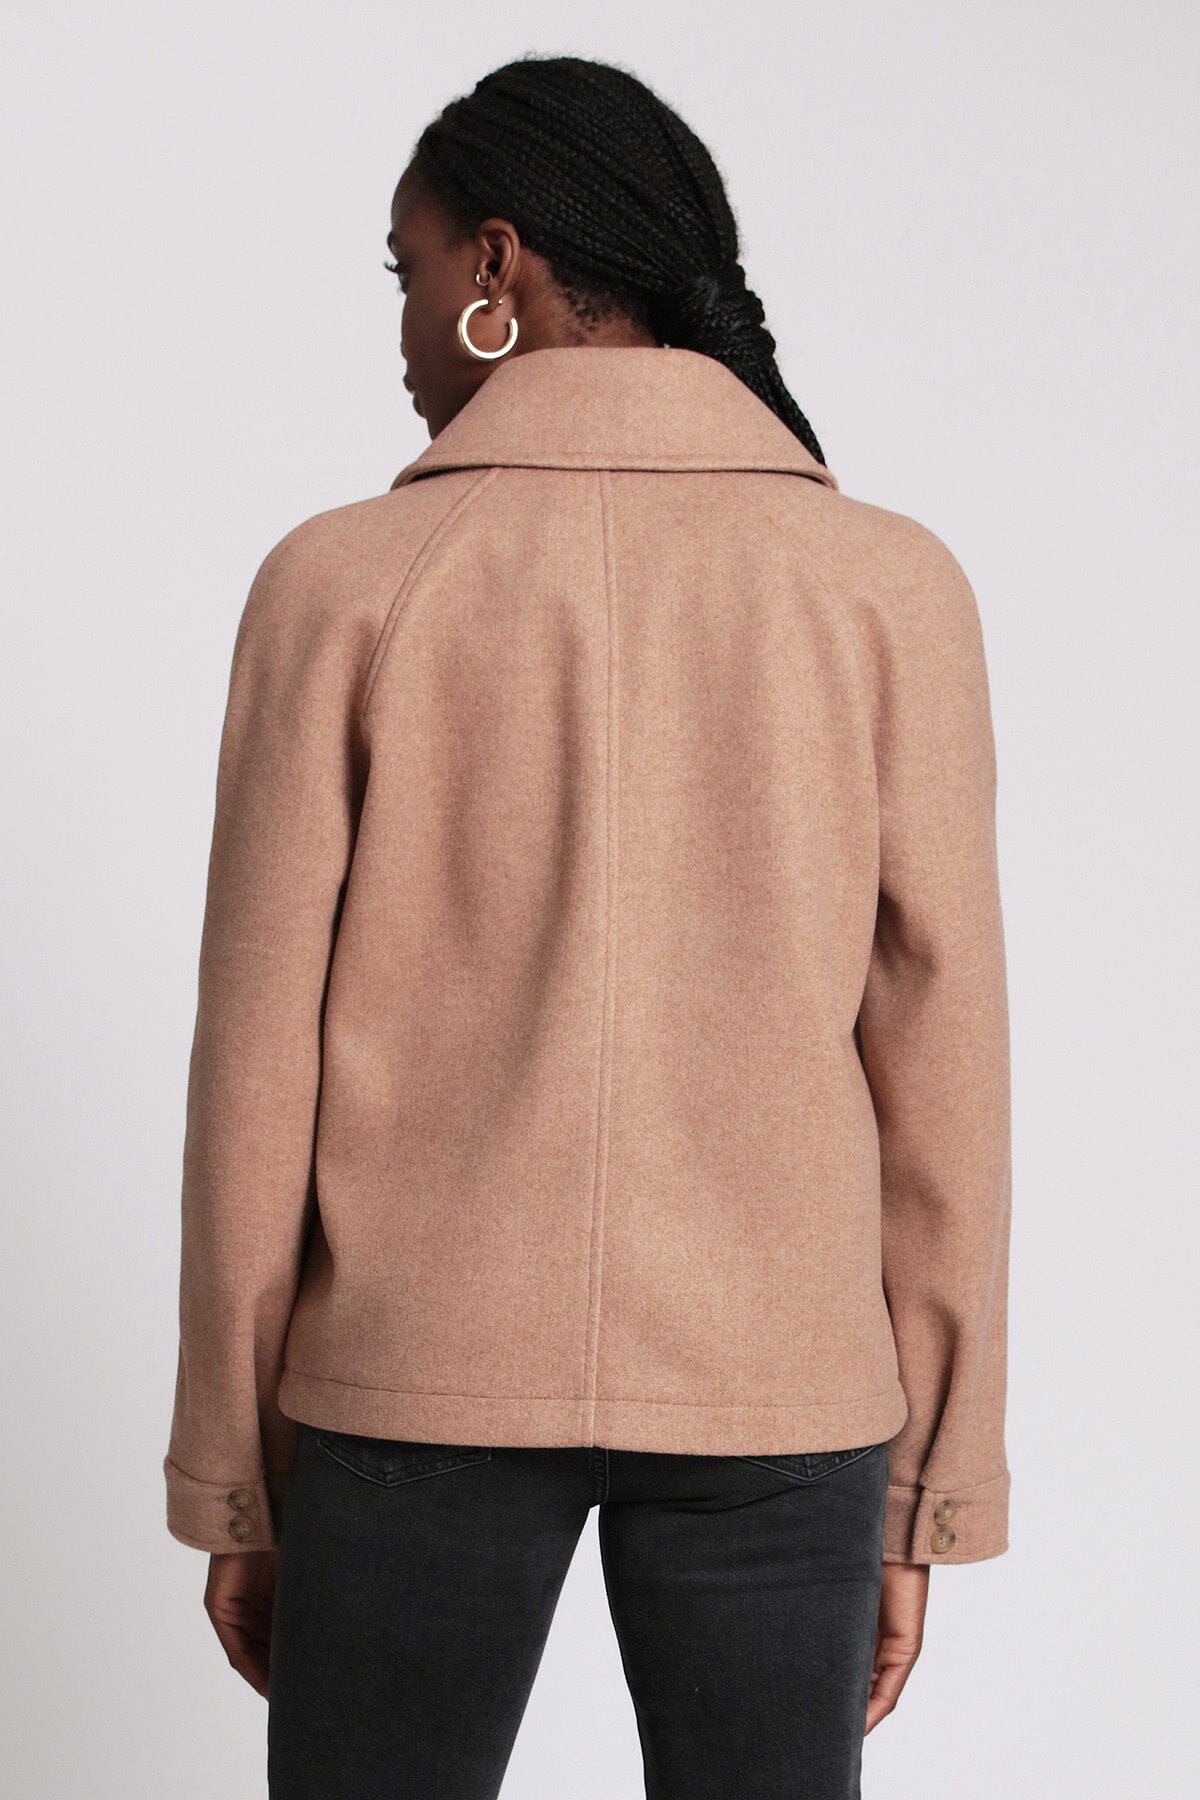 relaxed zip front jacket coat camel beige - women's figure flattering designer fashion office to date night coats jackets